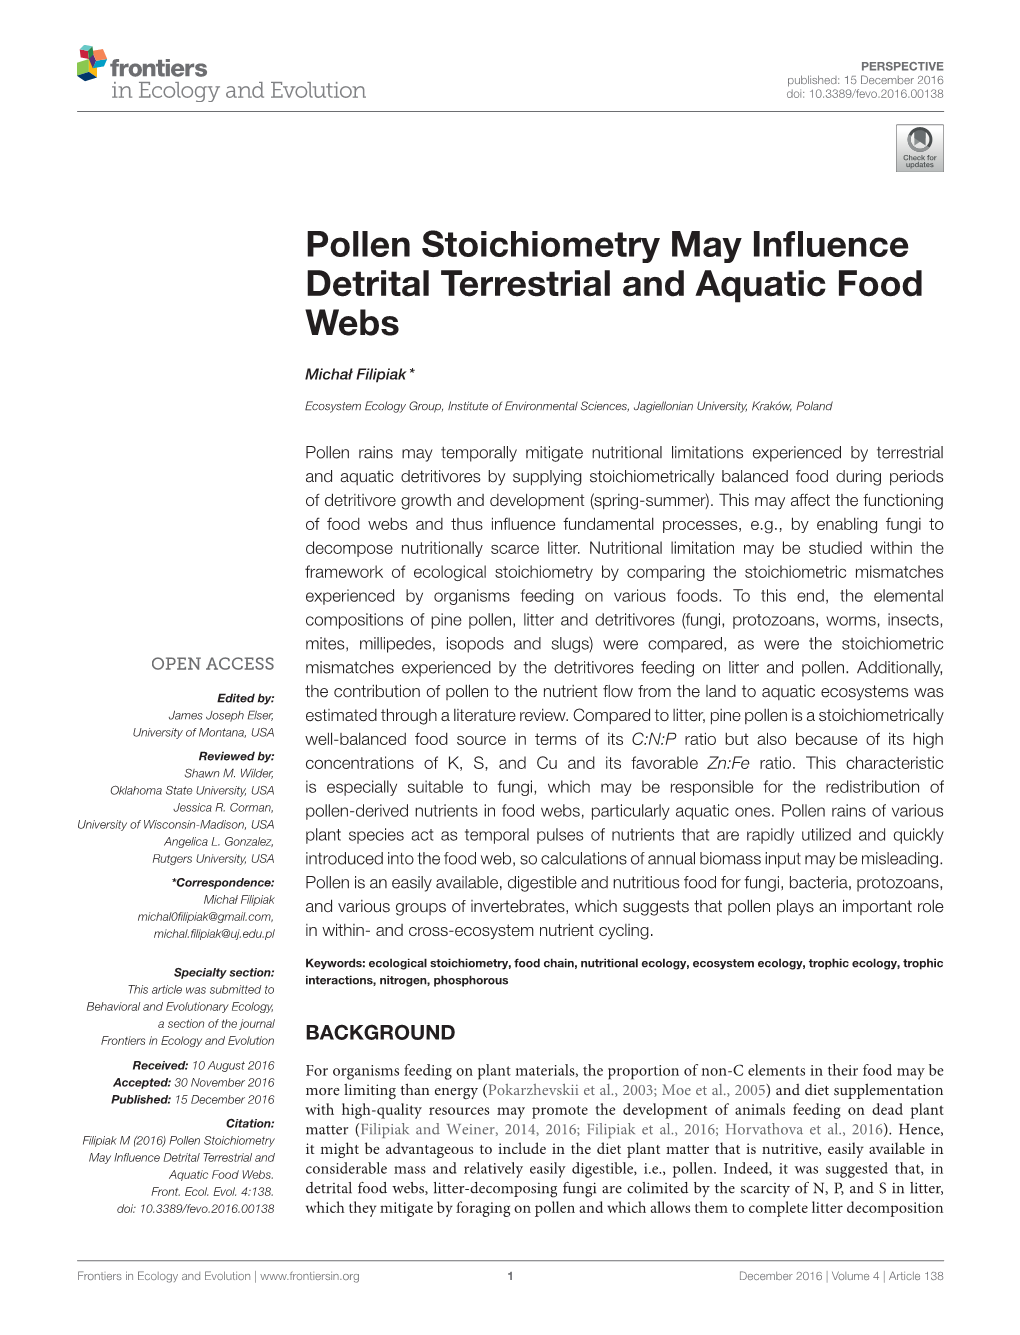 Pollen Stoichiometry May Influence Detrital Terrestrial and Aquatic Food